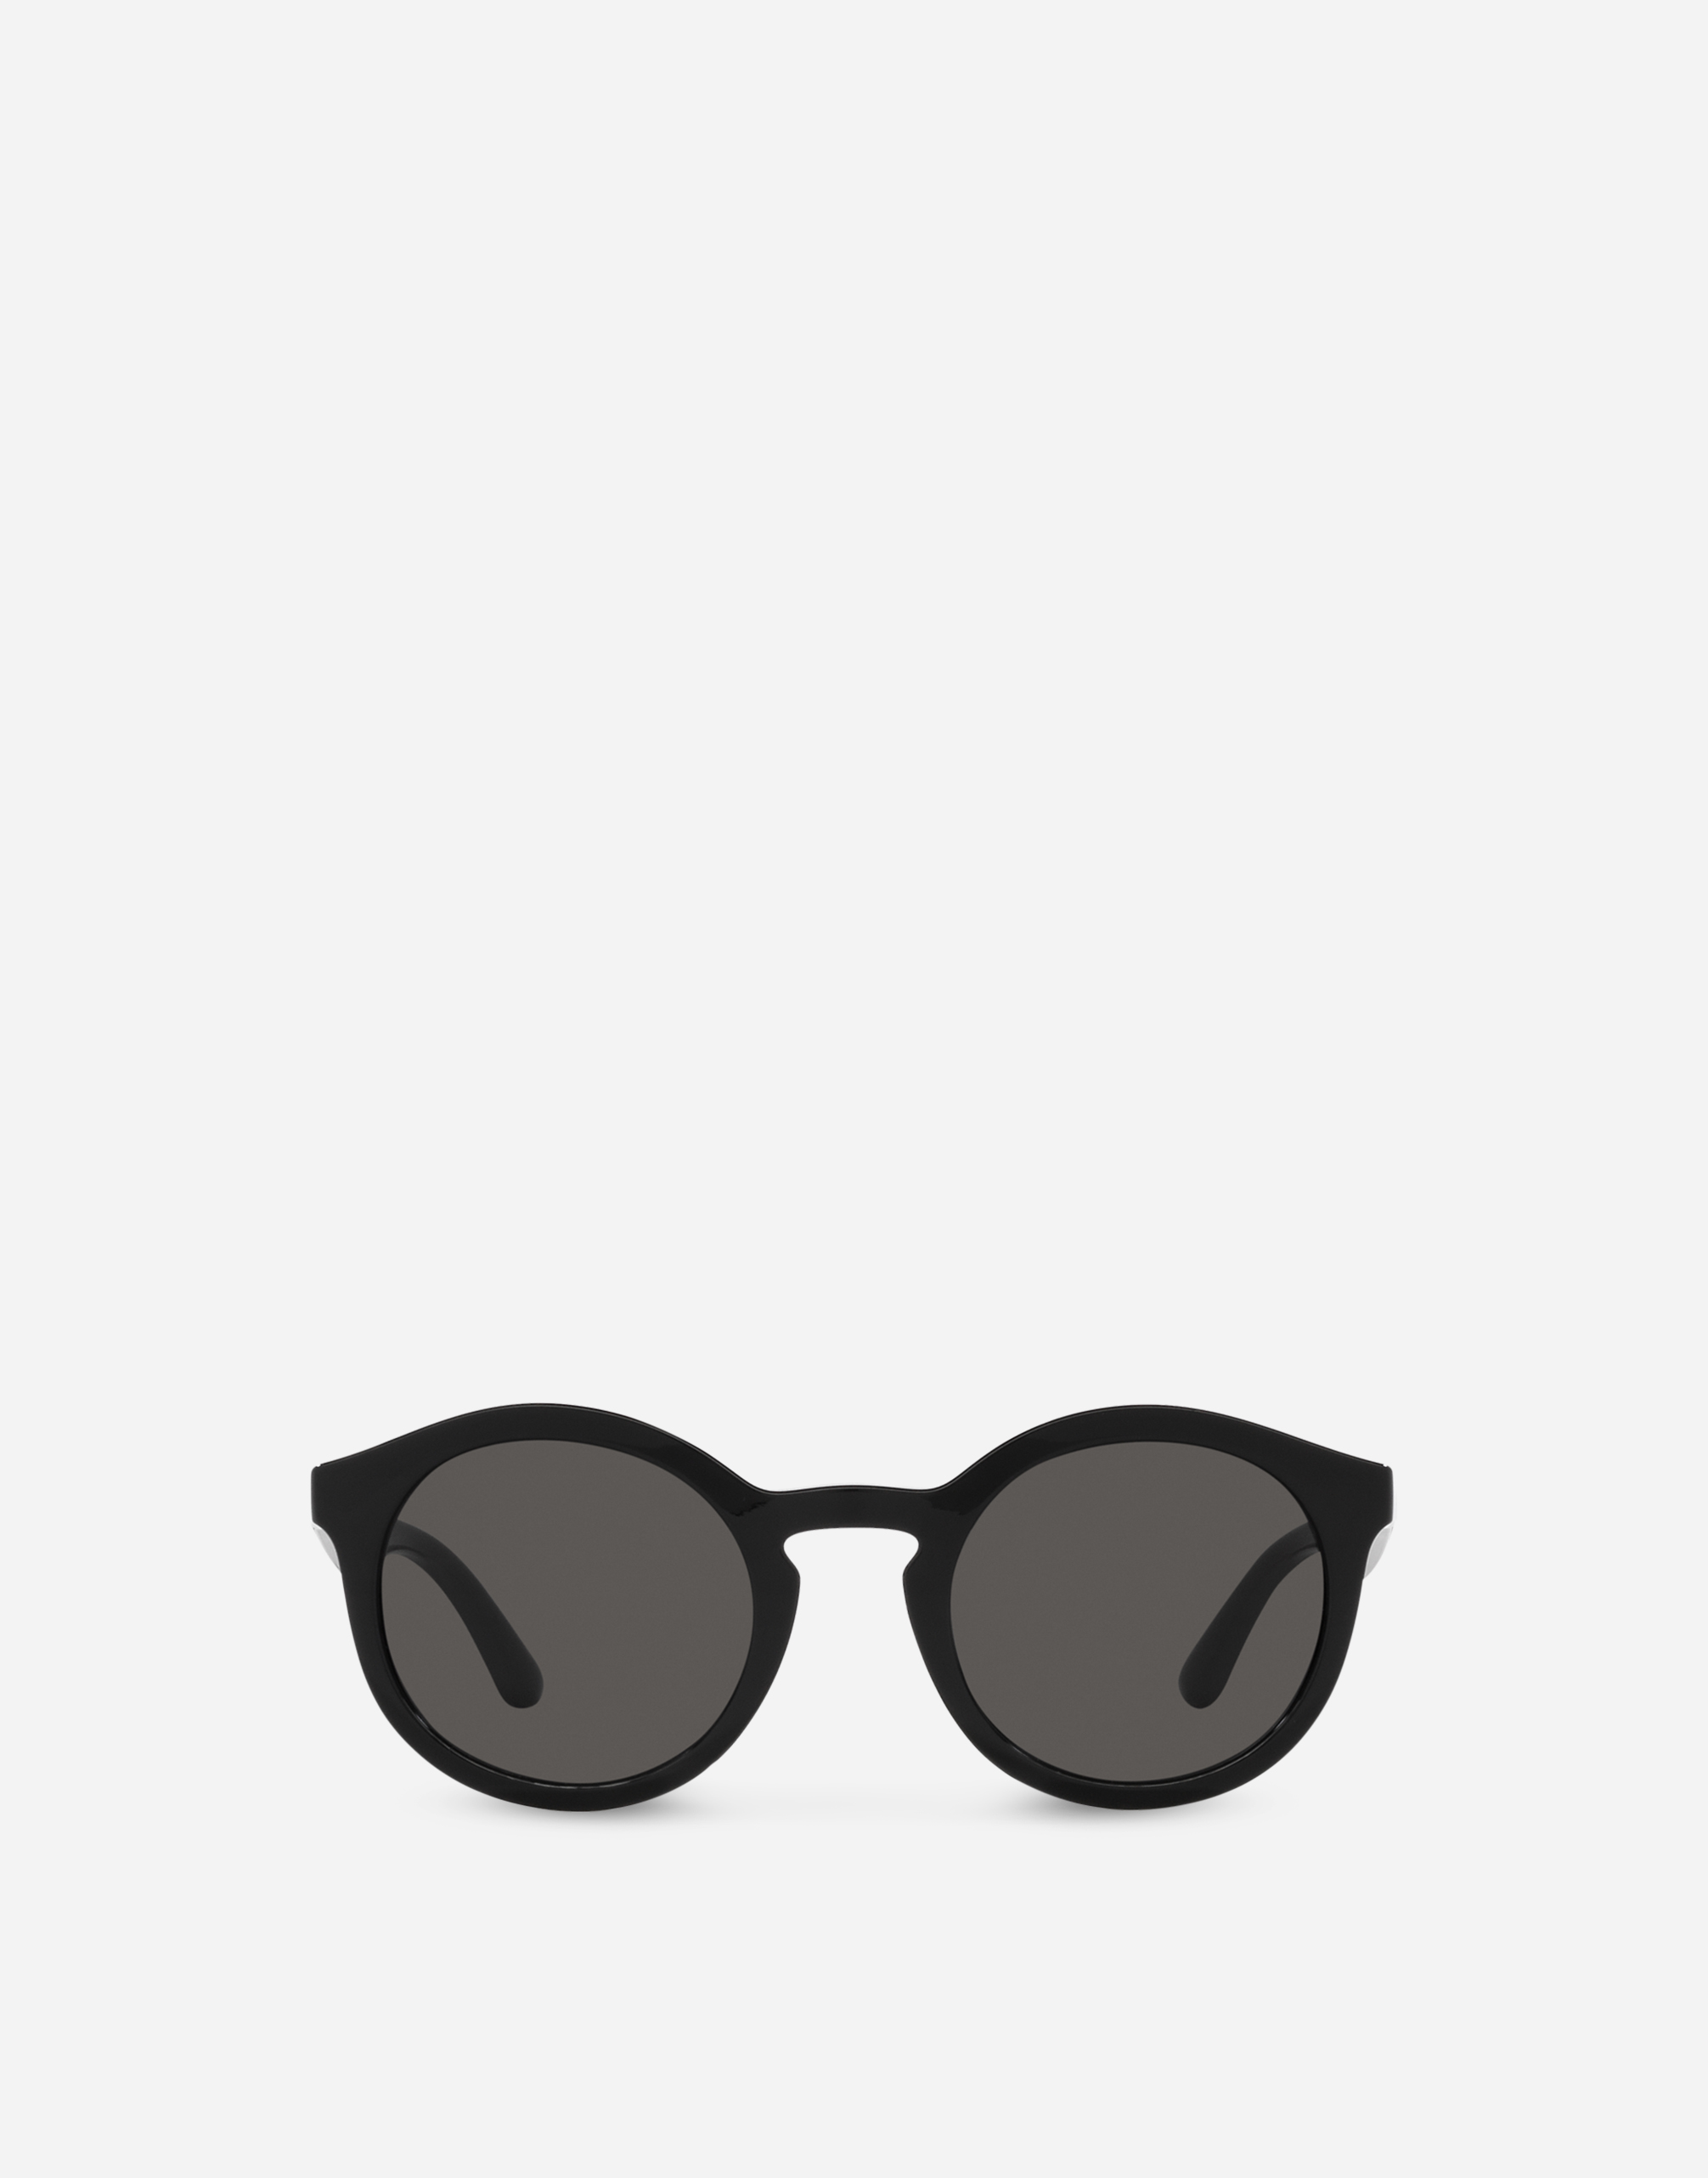 New Pattern Sunglasses in Black